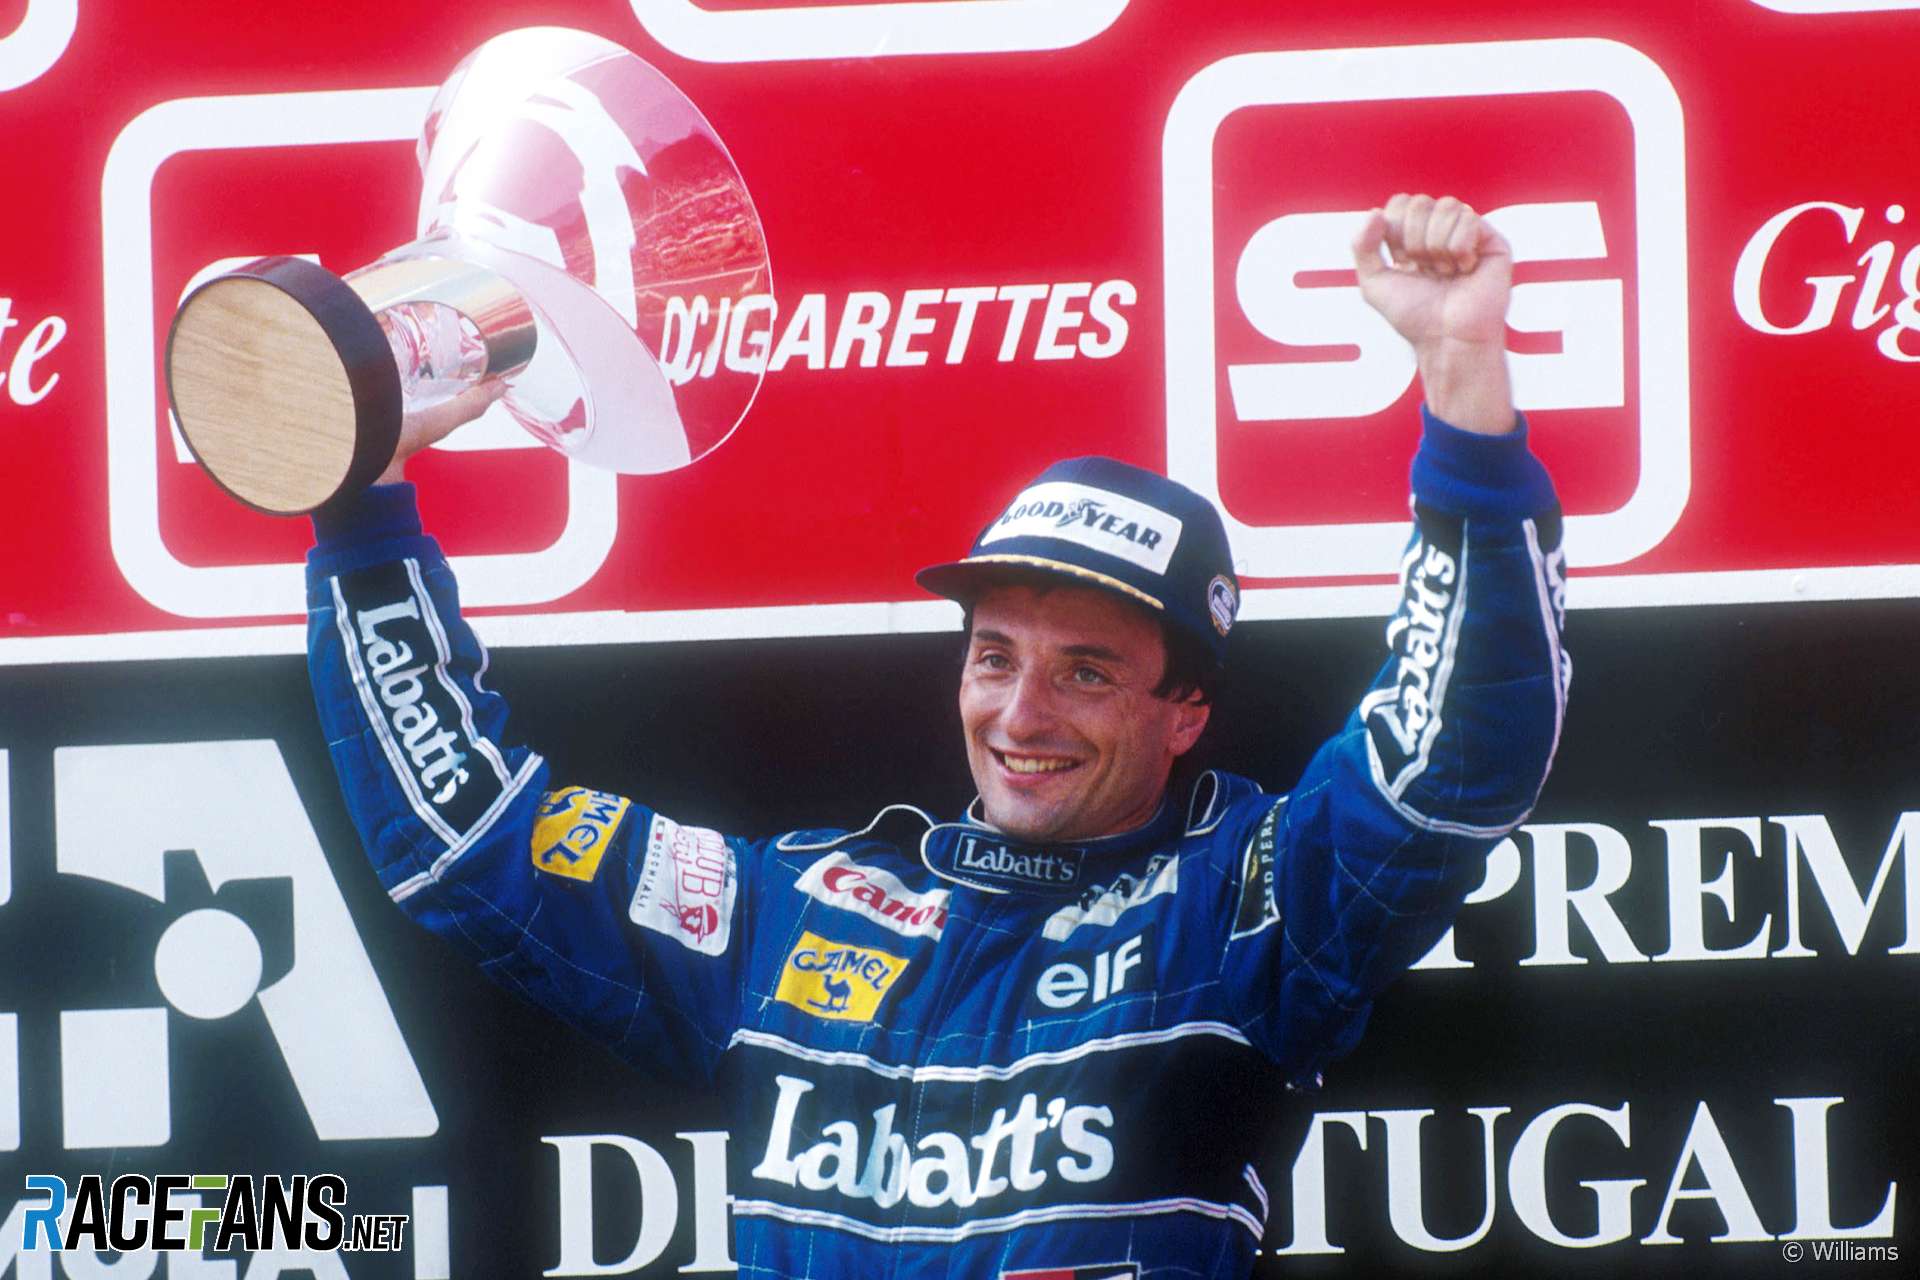 Ricciardo Patrese, Williams, Estoril, 1991